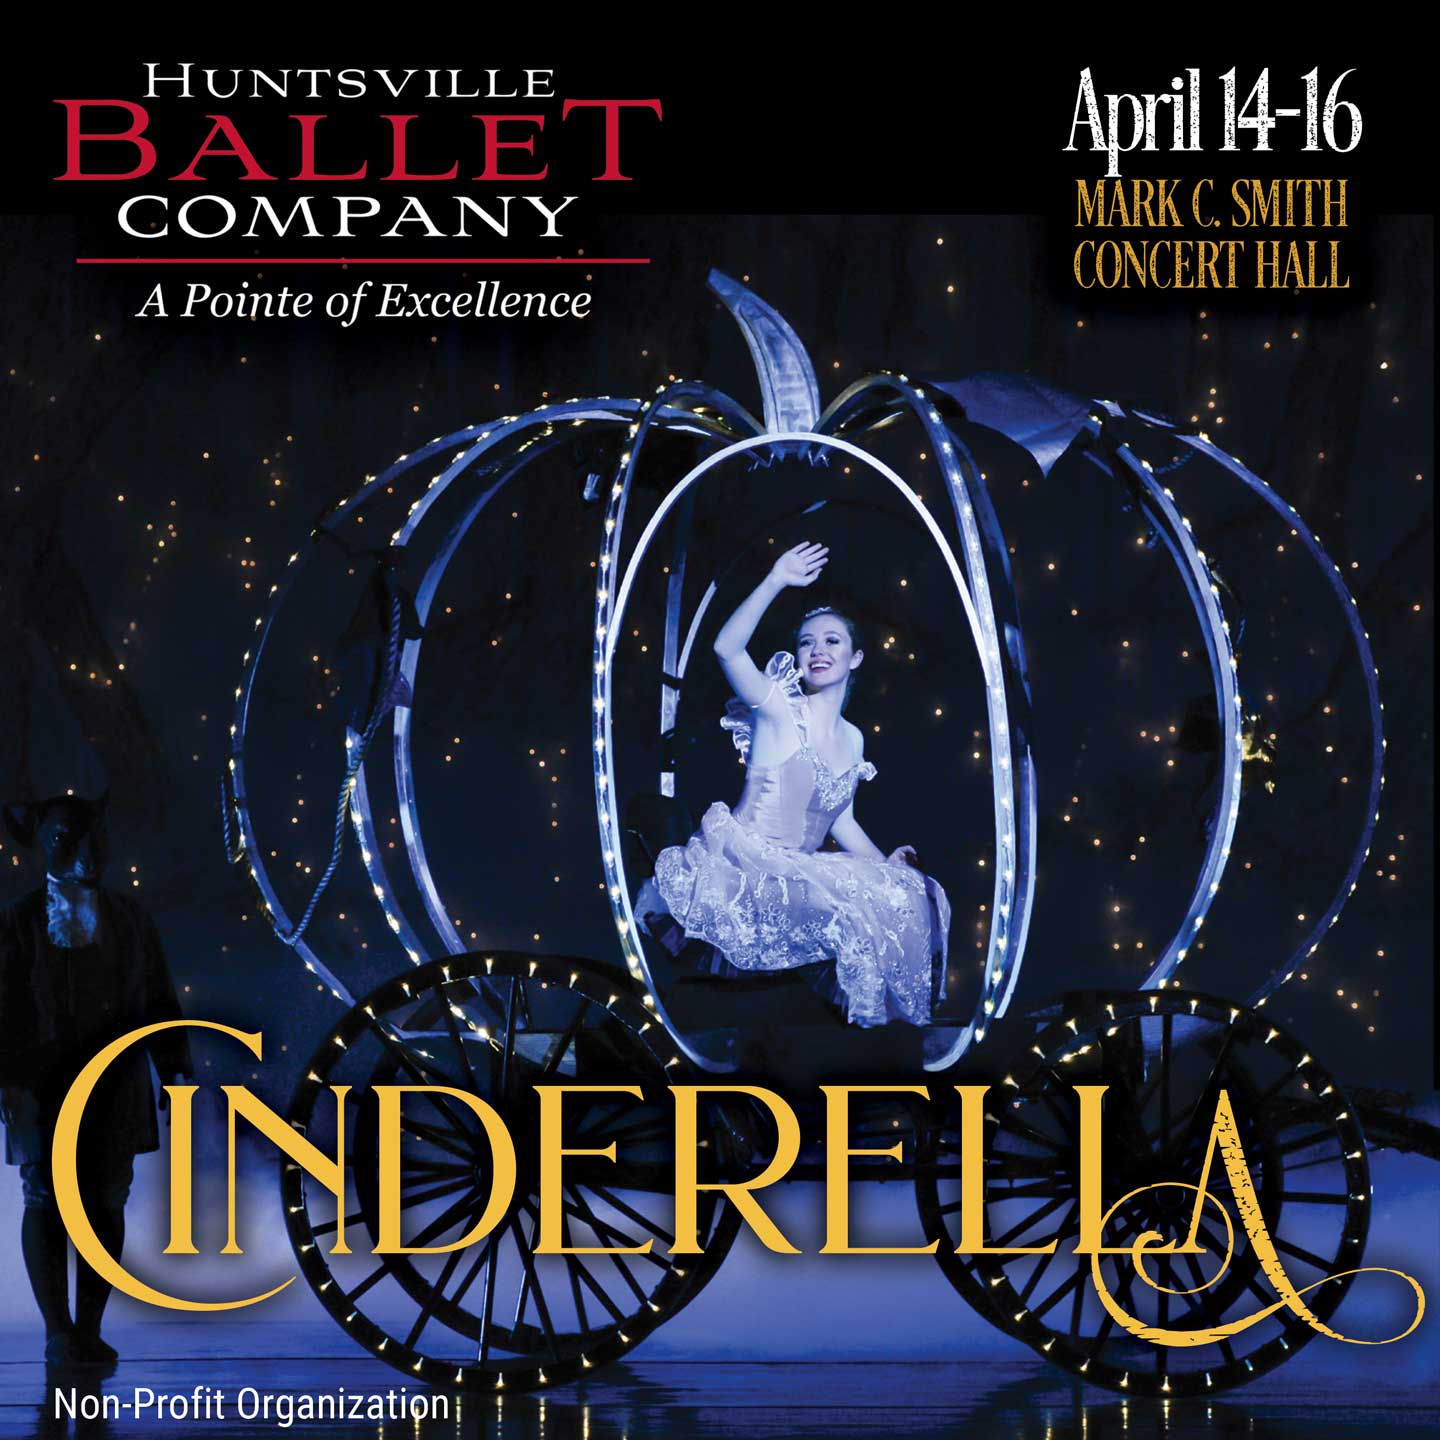 Huntsville Ballet Company Cinderella Promotion - April 14-16 2023